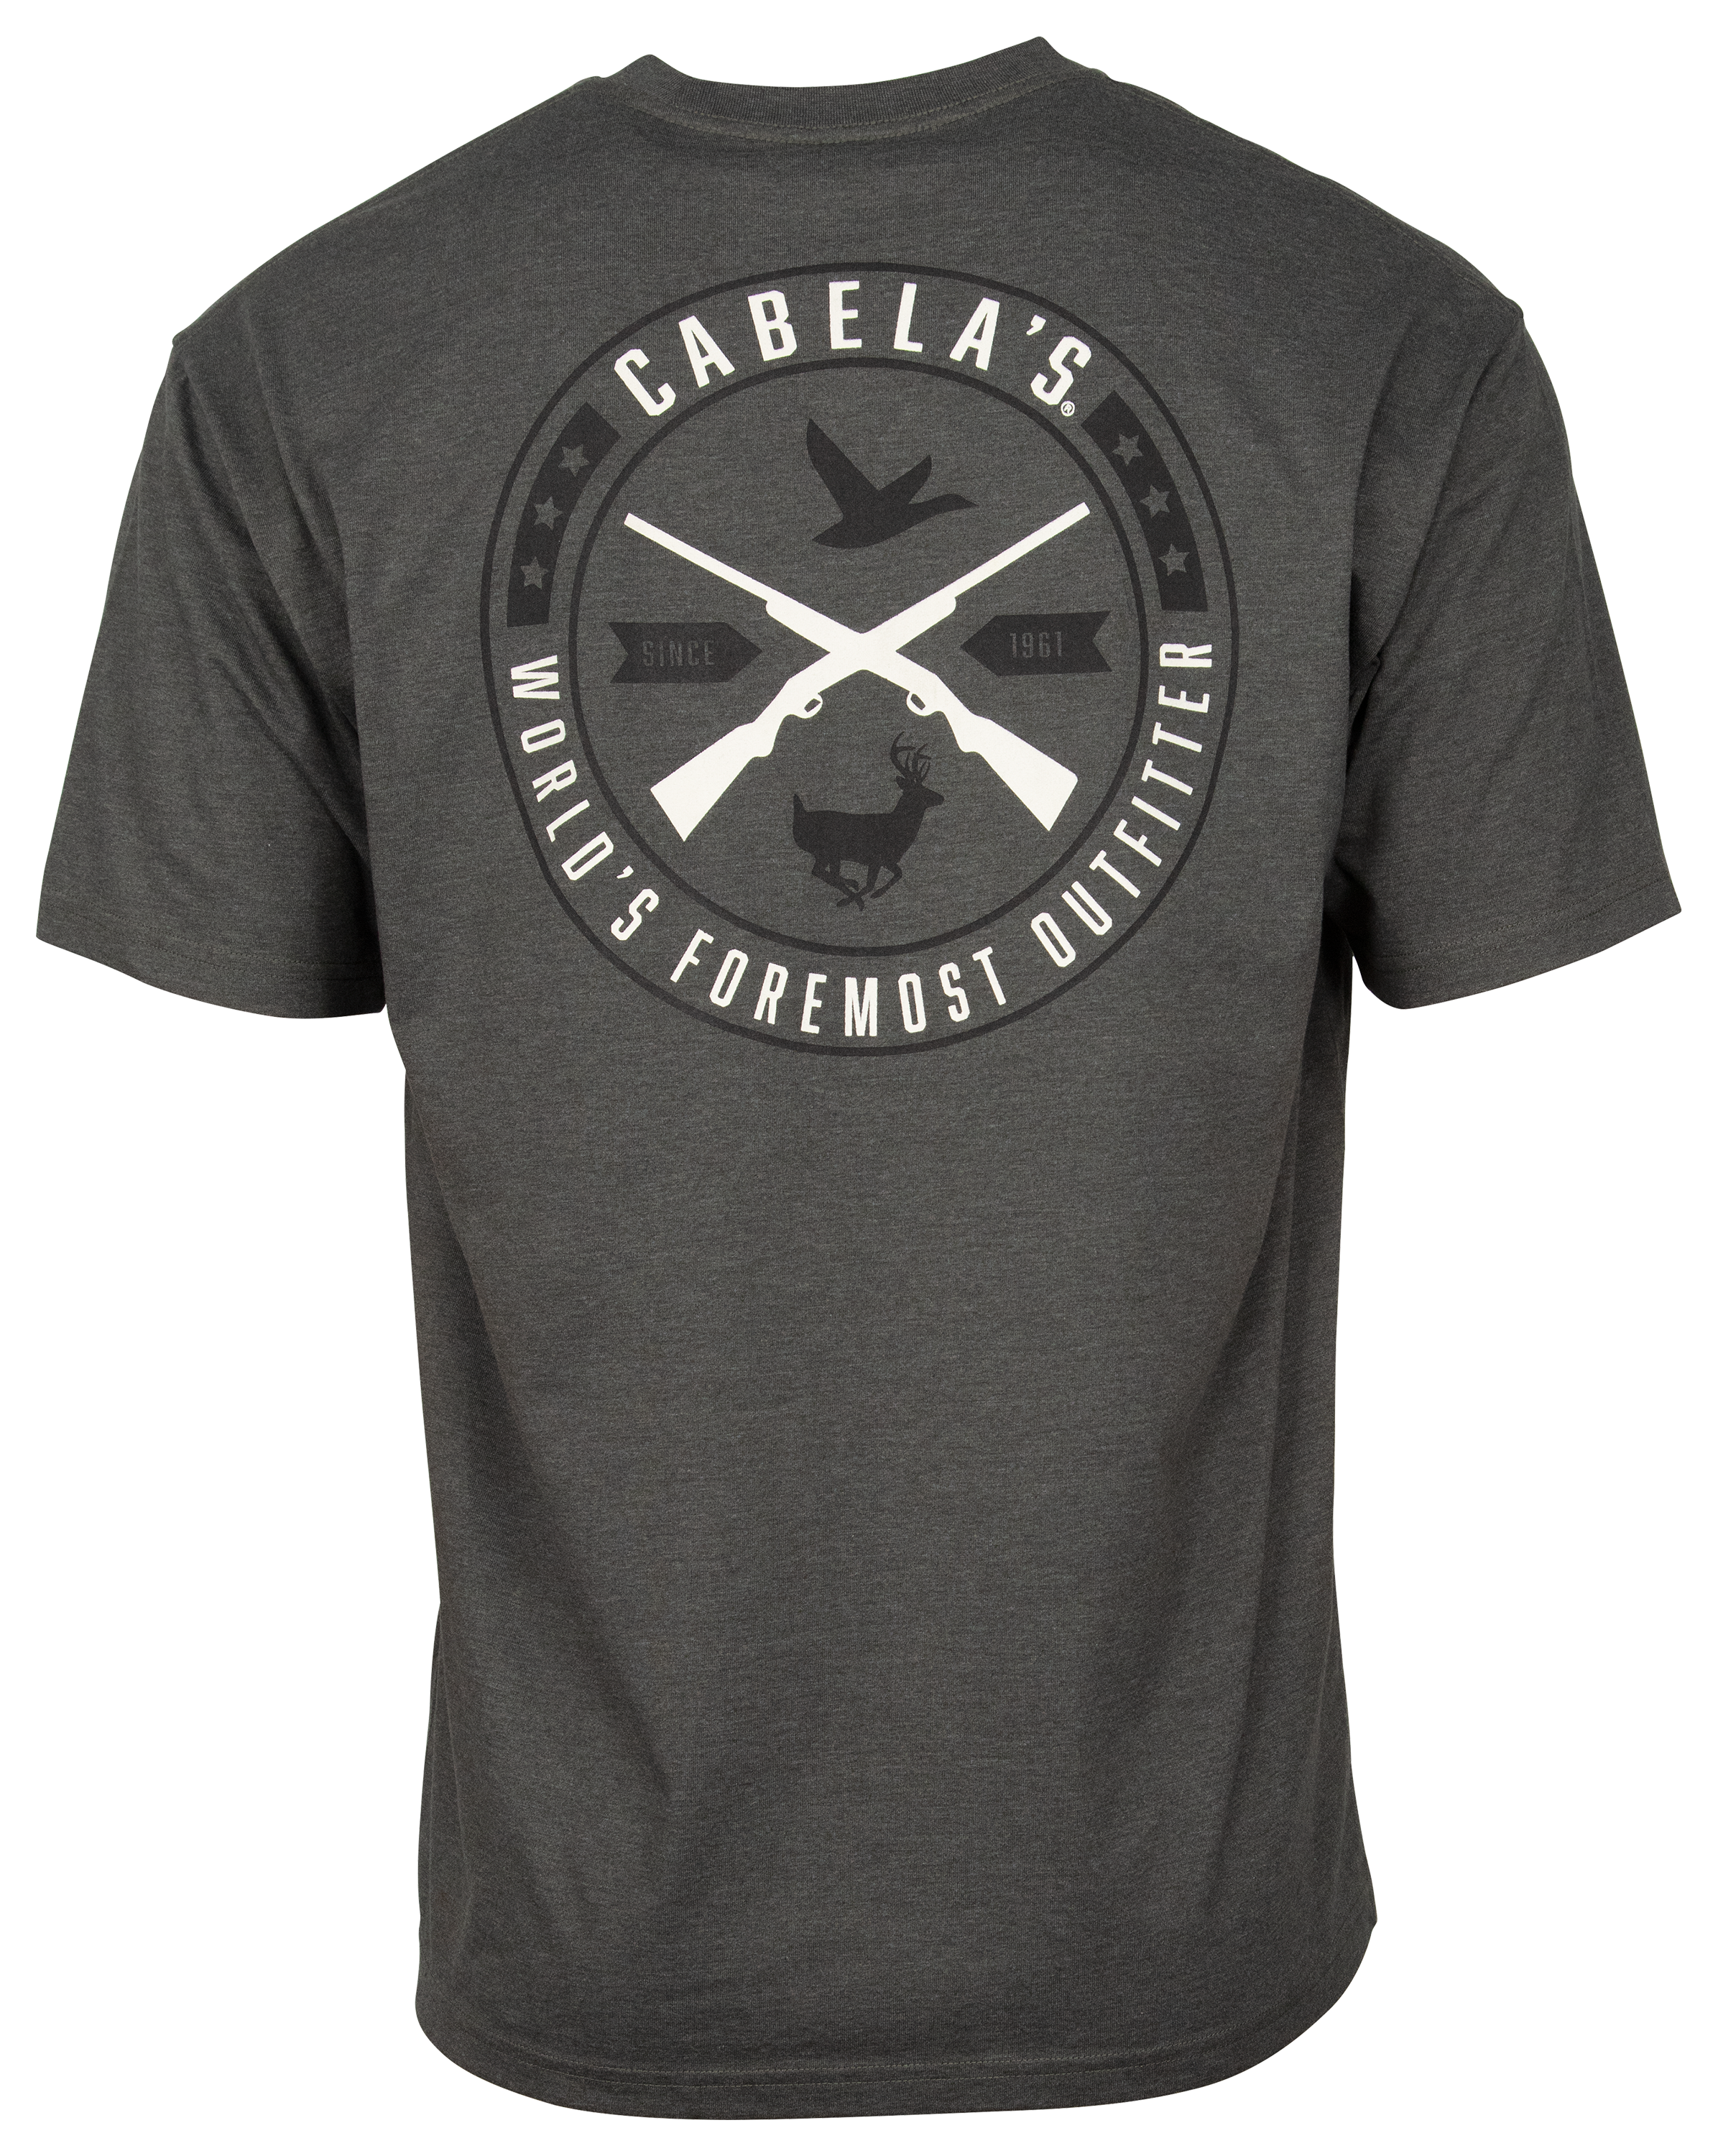 Cabela's Hunting Graphic Short-Sleeve T-Shirt for Men